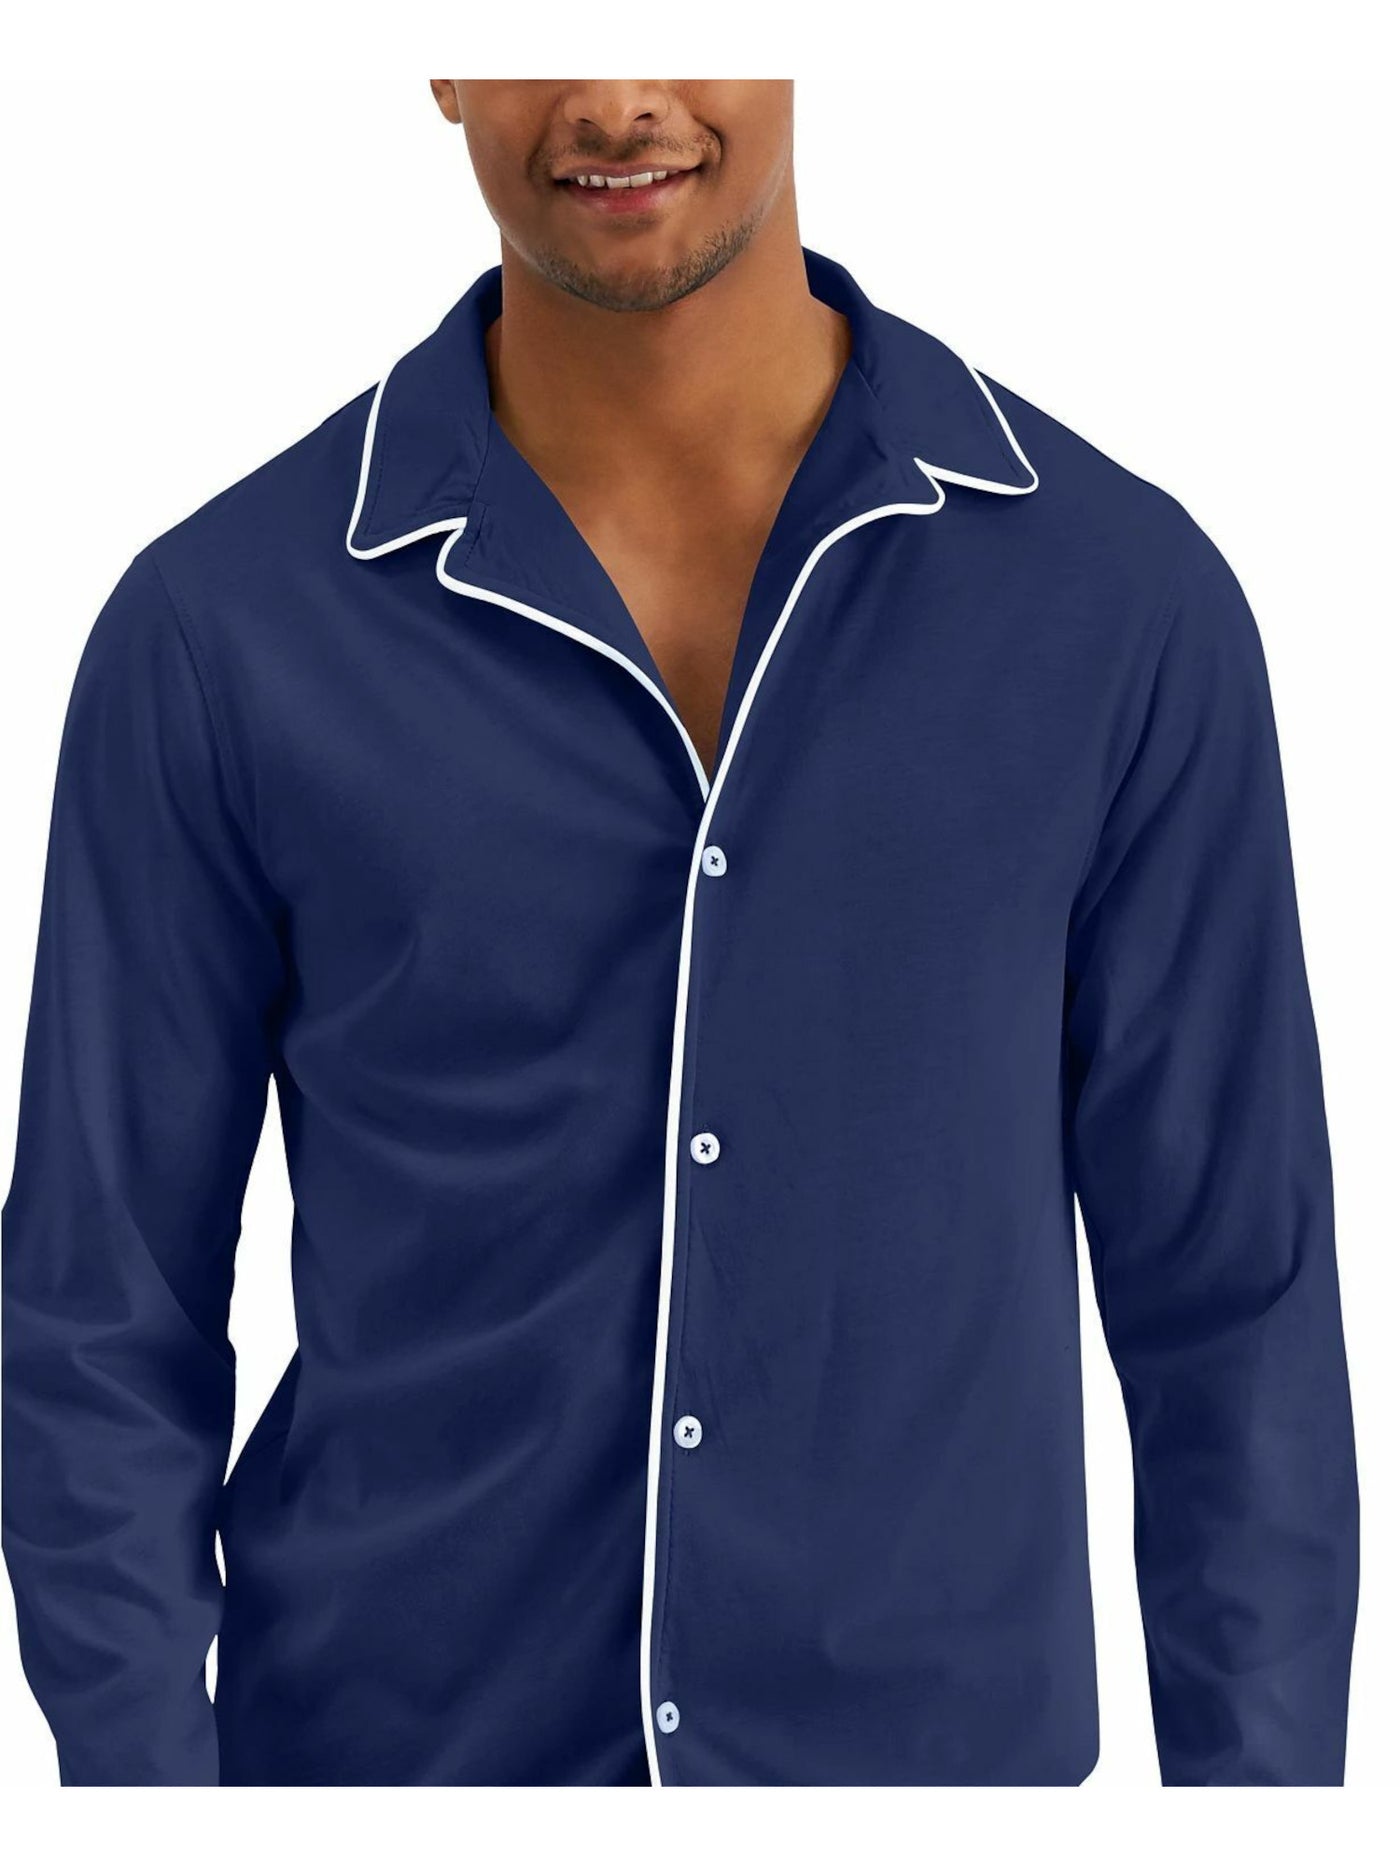 CLUBROOM Intimates Blue Cotton Blend Notched Collar Sleep Shirt Pajama Top XXL